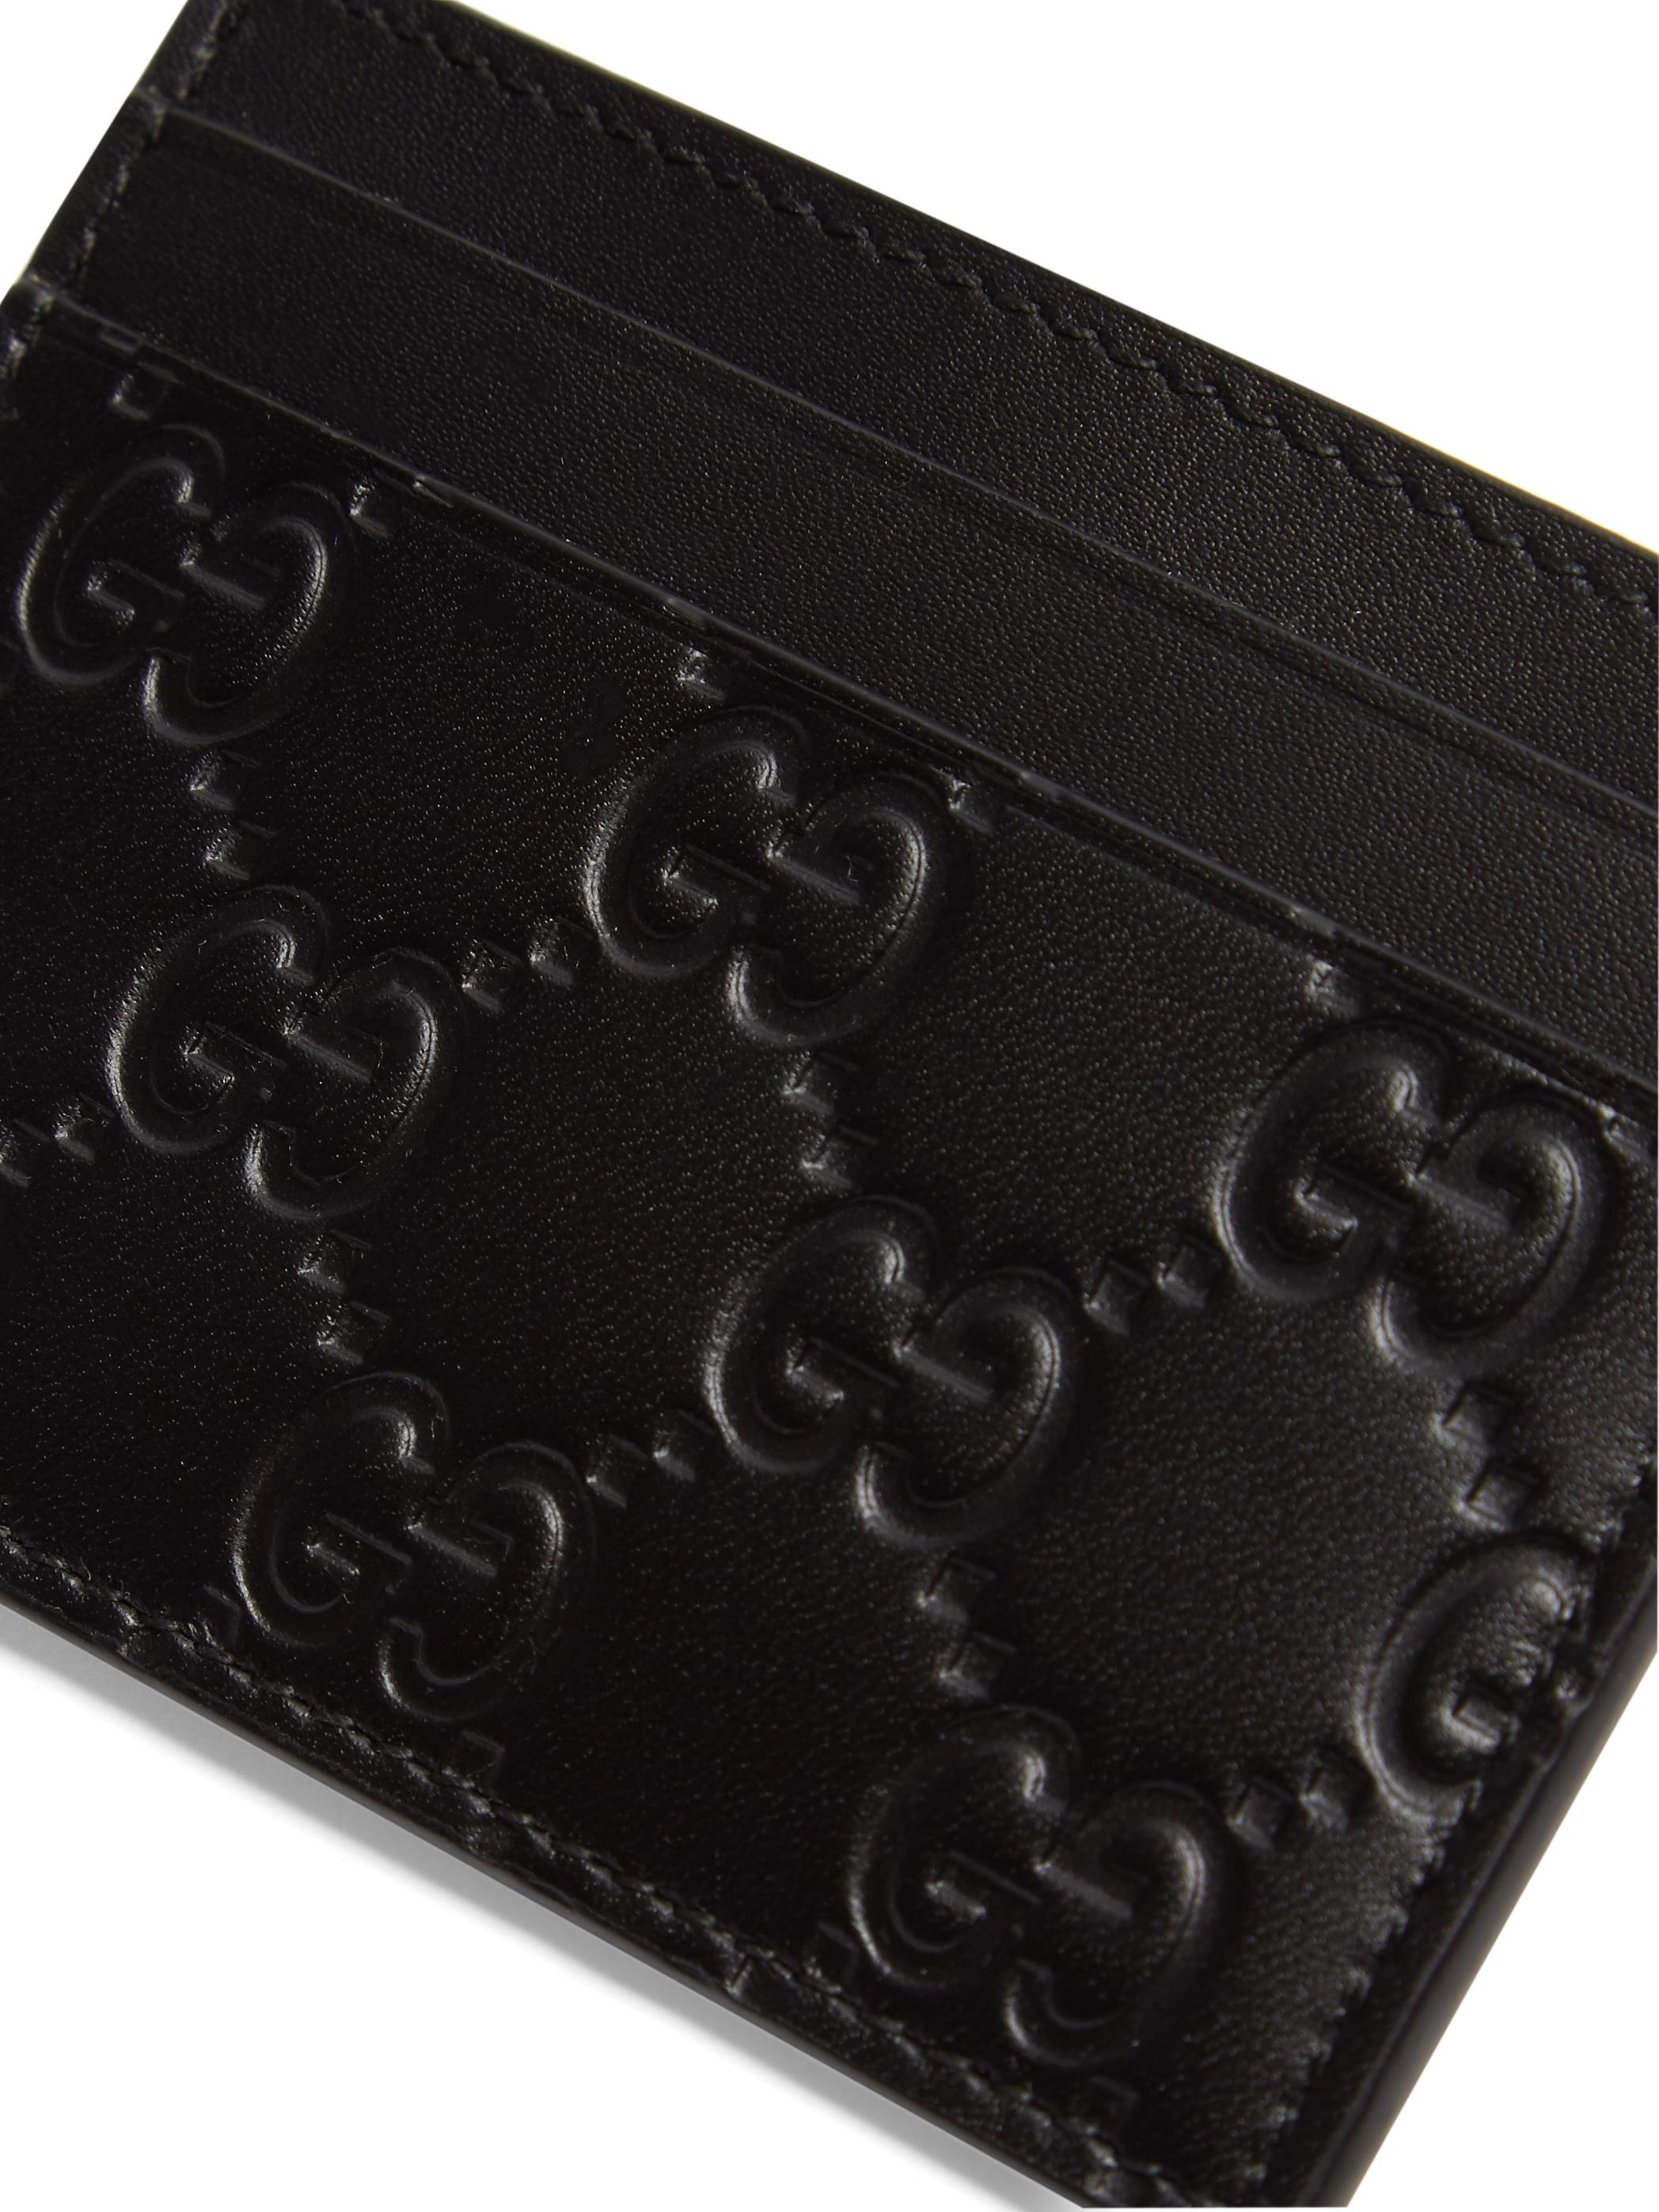 Gucci Gg-debossed Leather Cardholder in Black for Men - Lyst